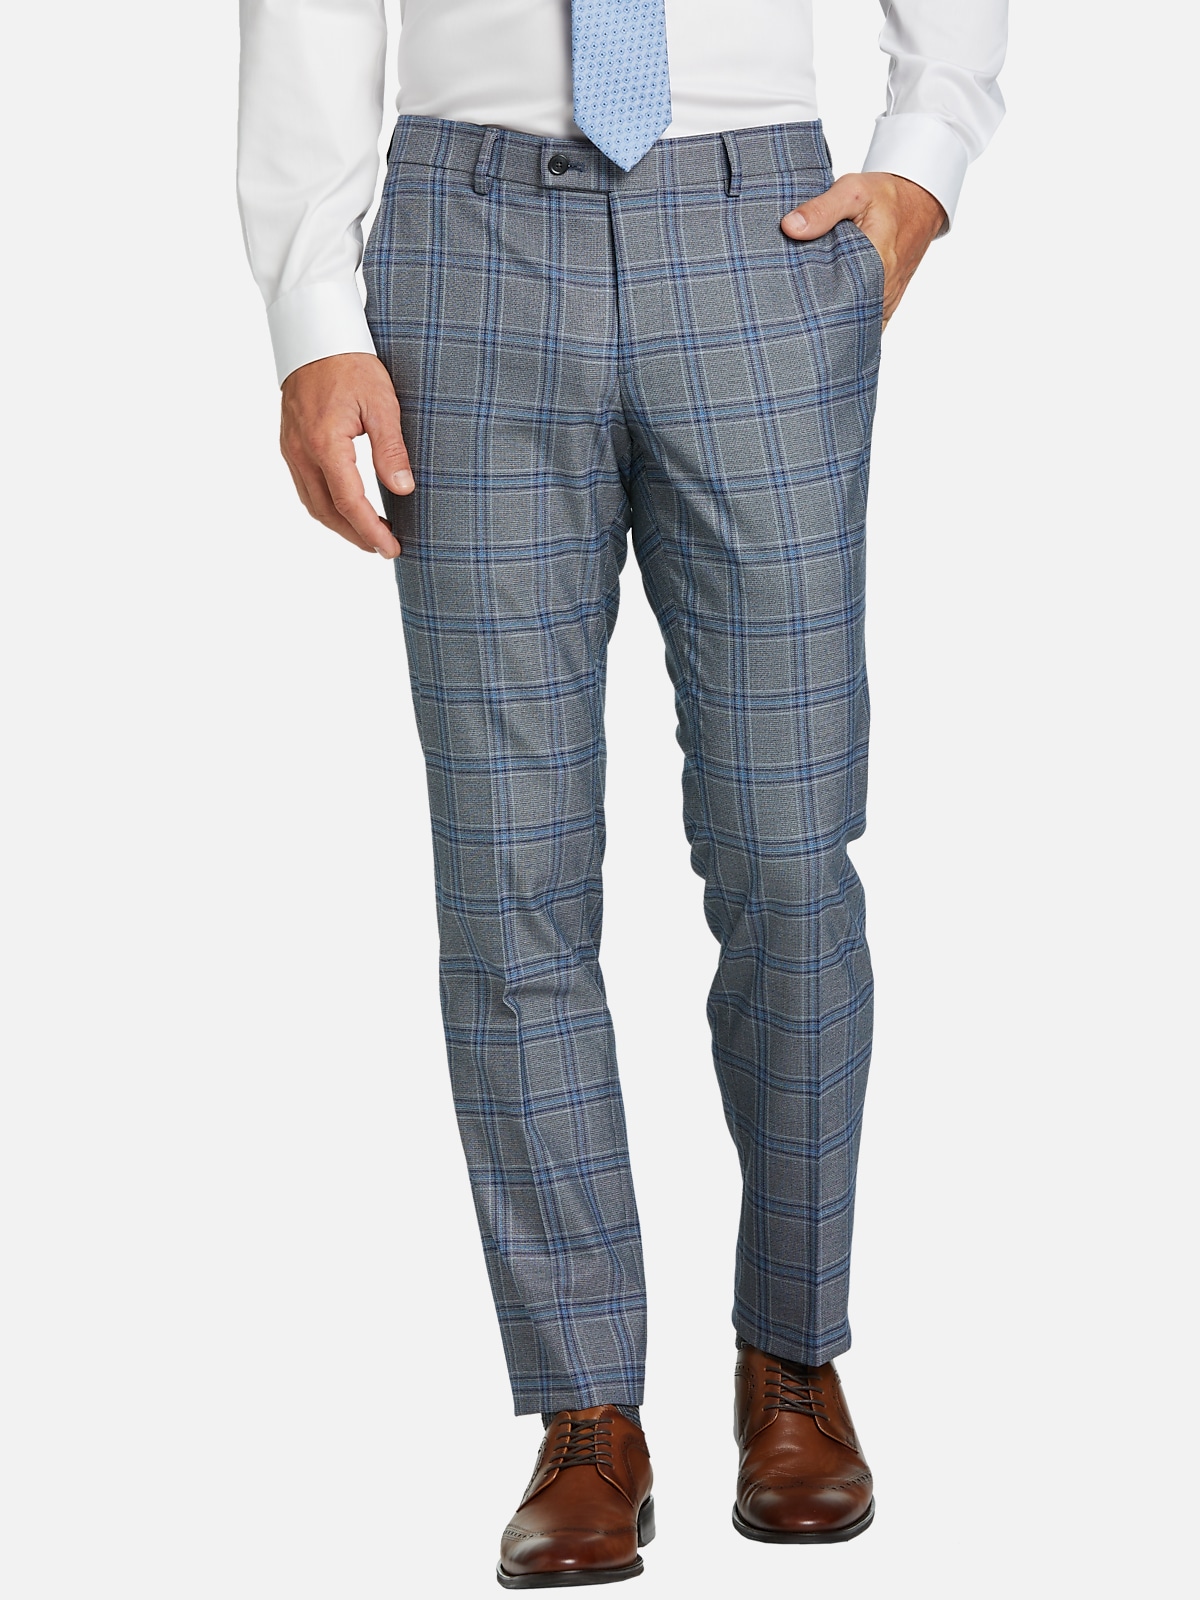 Egara Skinny Fit Plaid Suit Separates Pants | All Clearance $39.99| Men ...